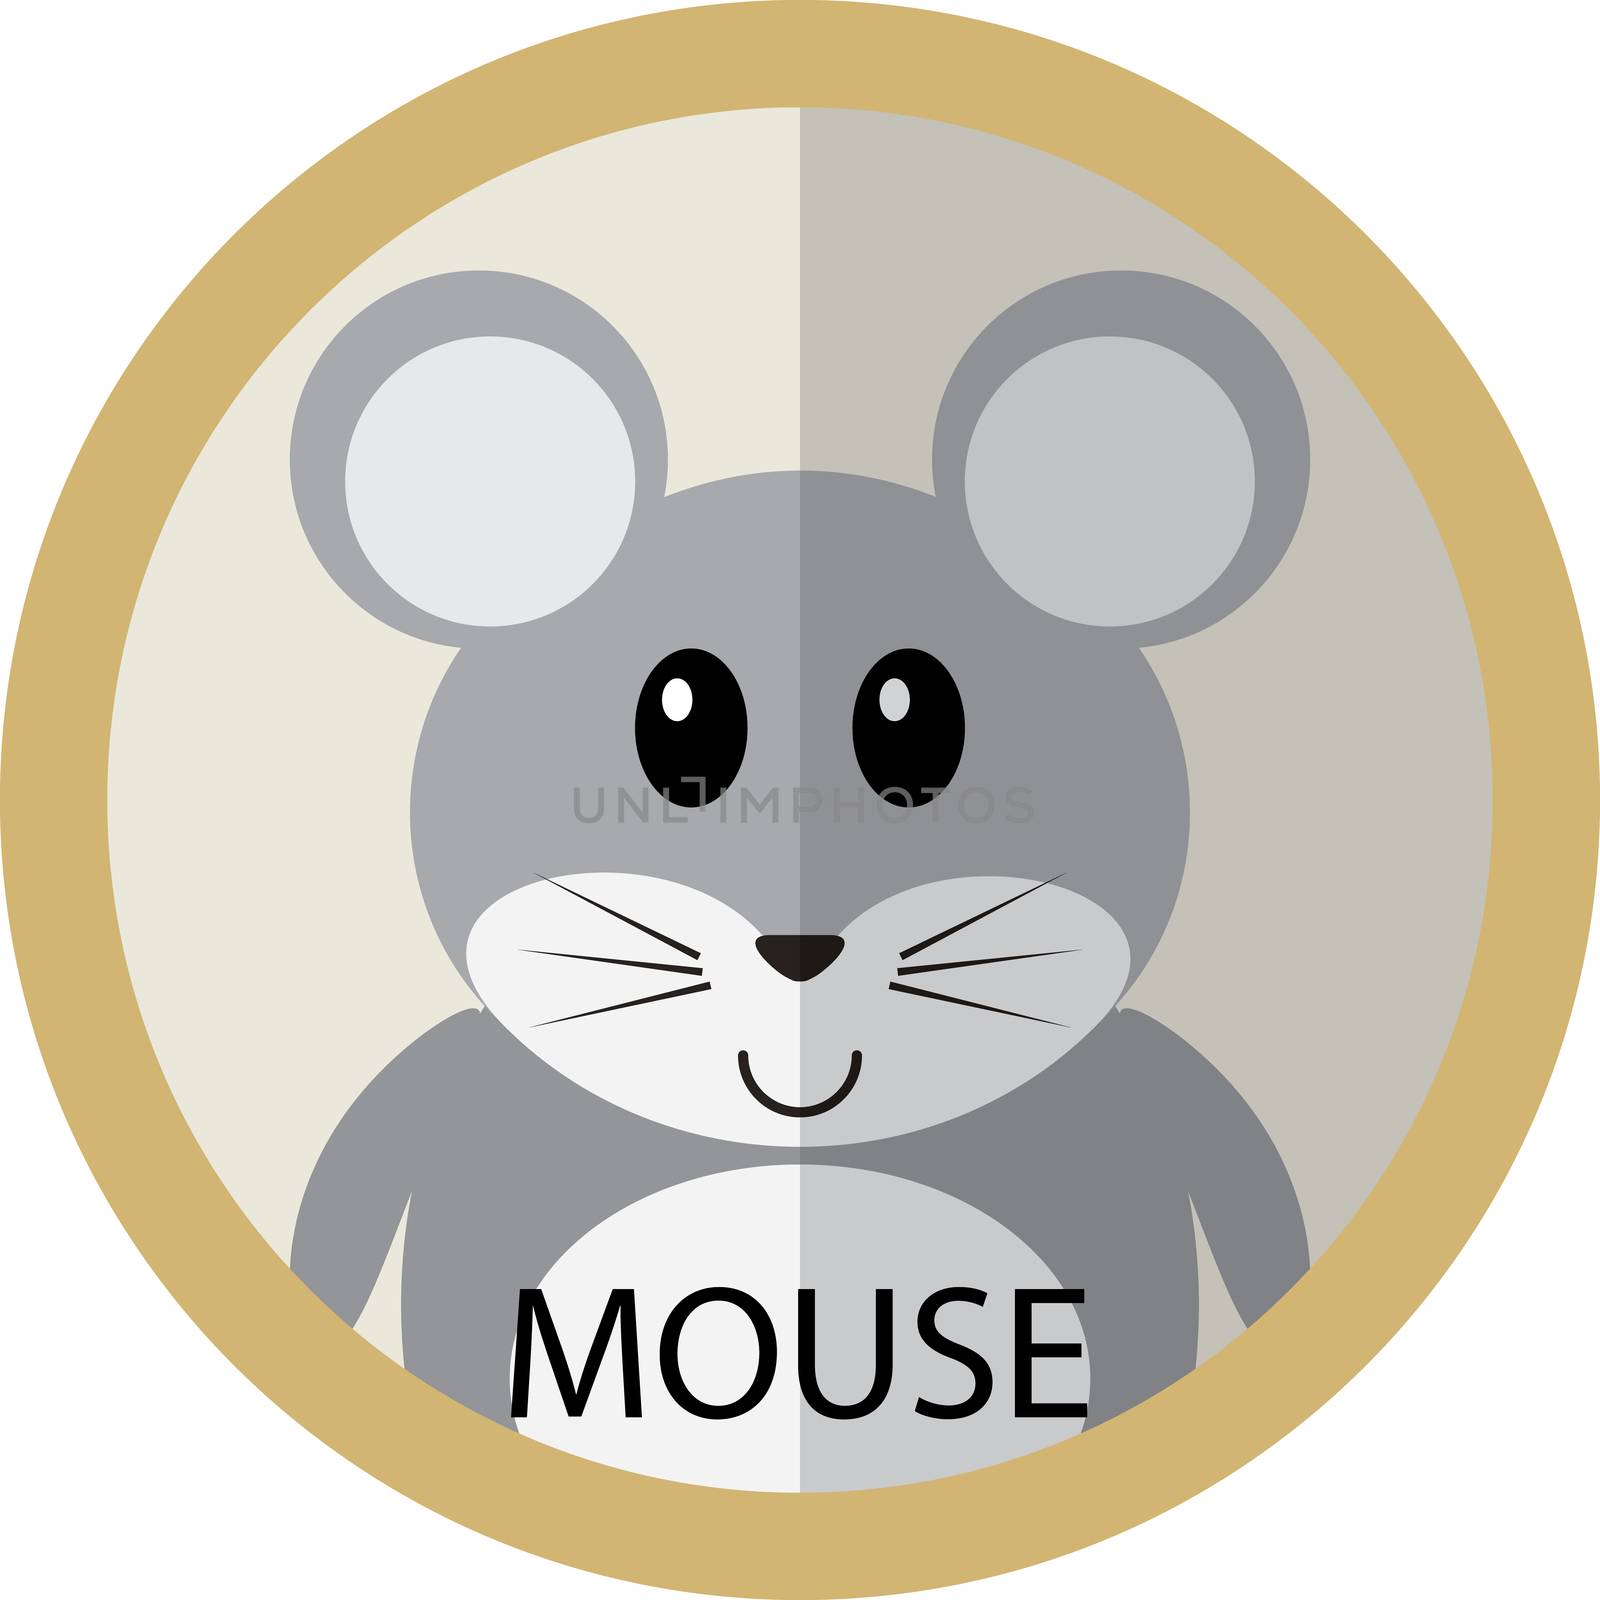 Cute grey mouse cartoon flat icon avatar round circle by Lemon_workshop